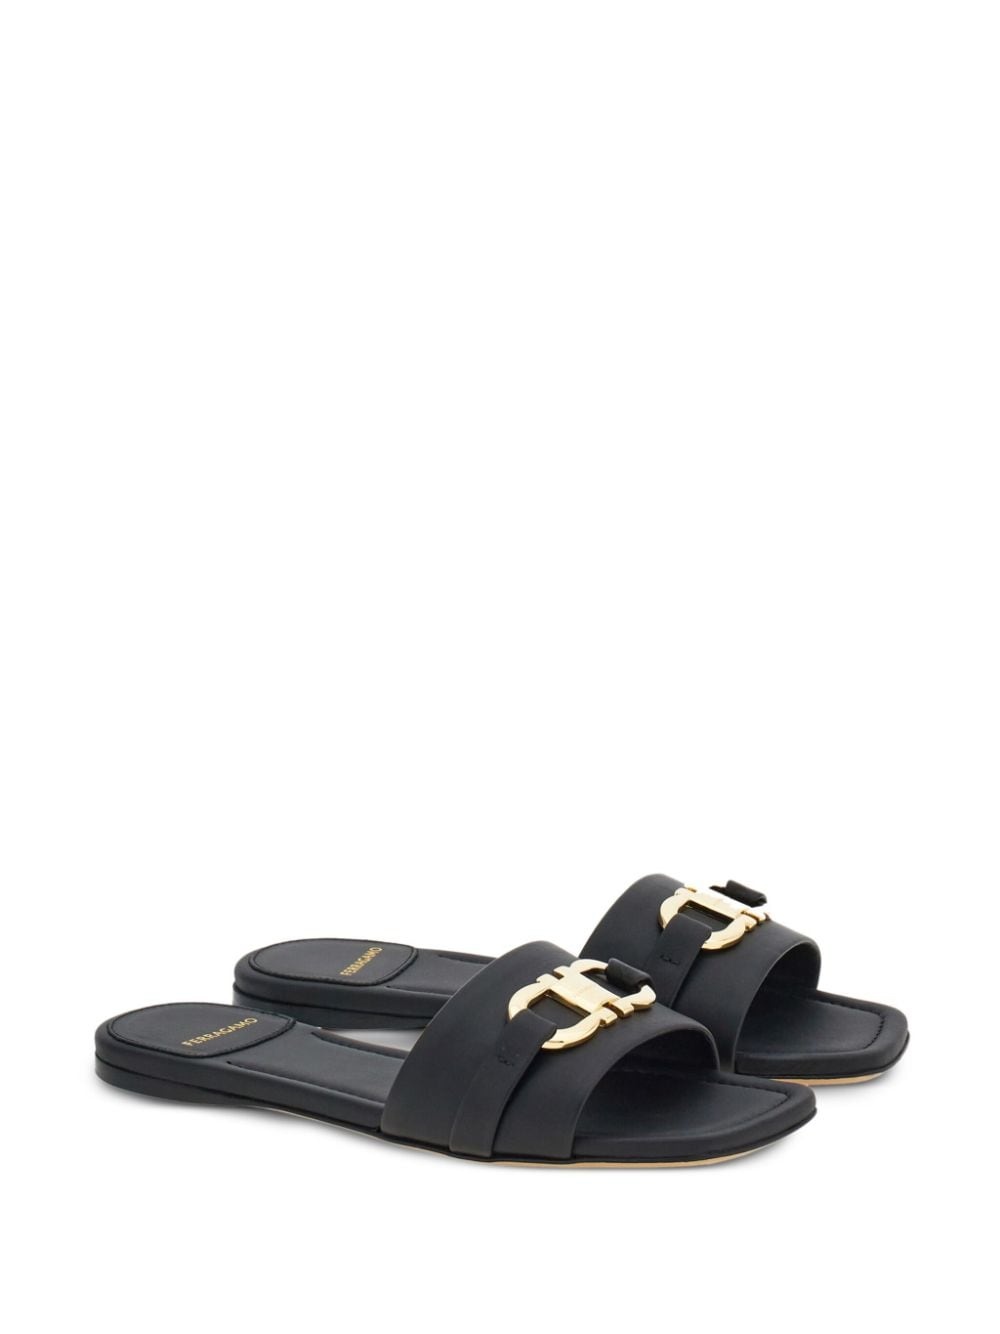 Gancini leather flat sandals - 4